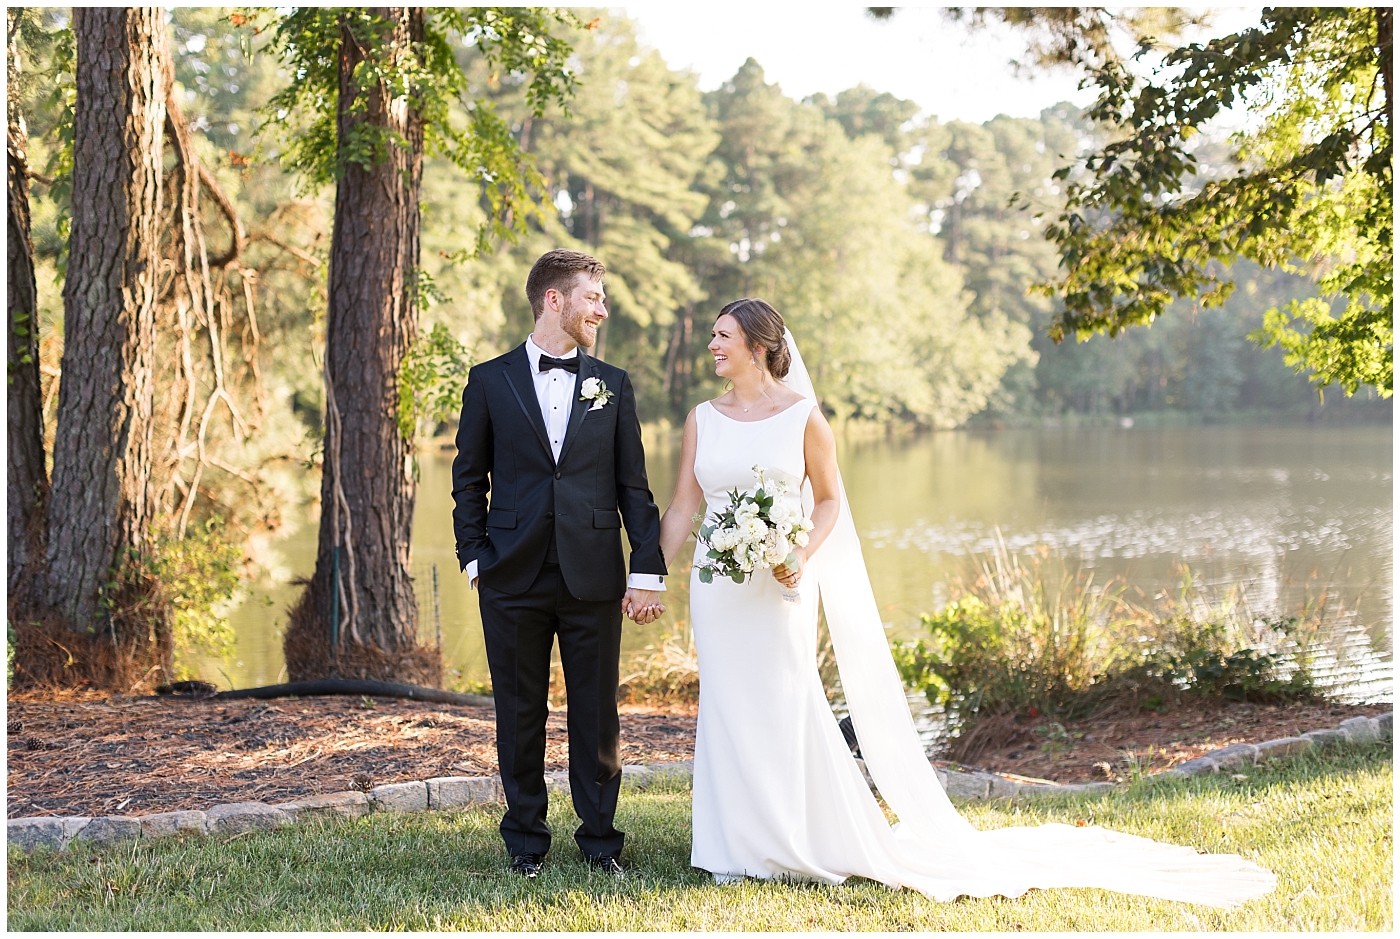 Summer Wedding in Raleigh NC at the Angus Barn Pavilion | Sarah Hinckley Photography | Raleigh Wedding Photographer